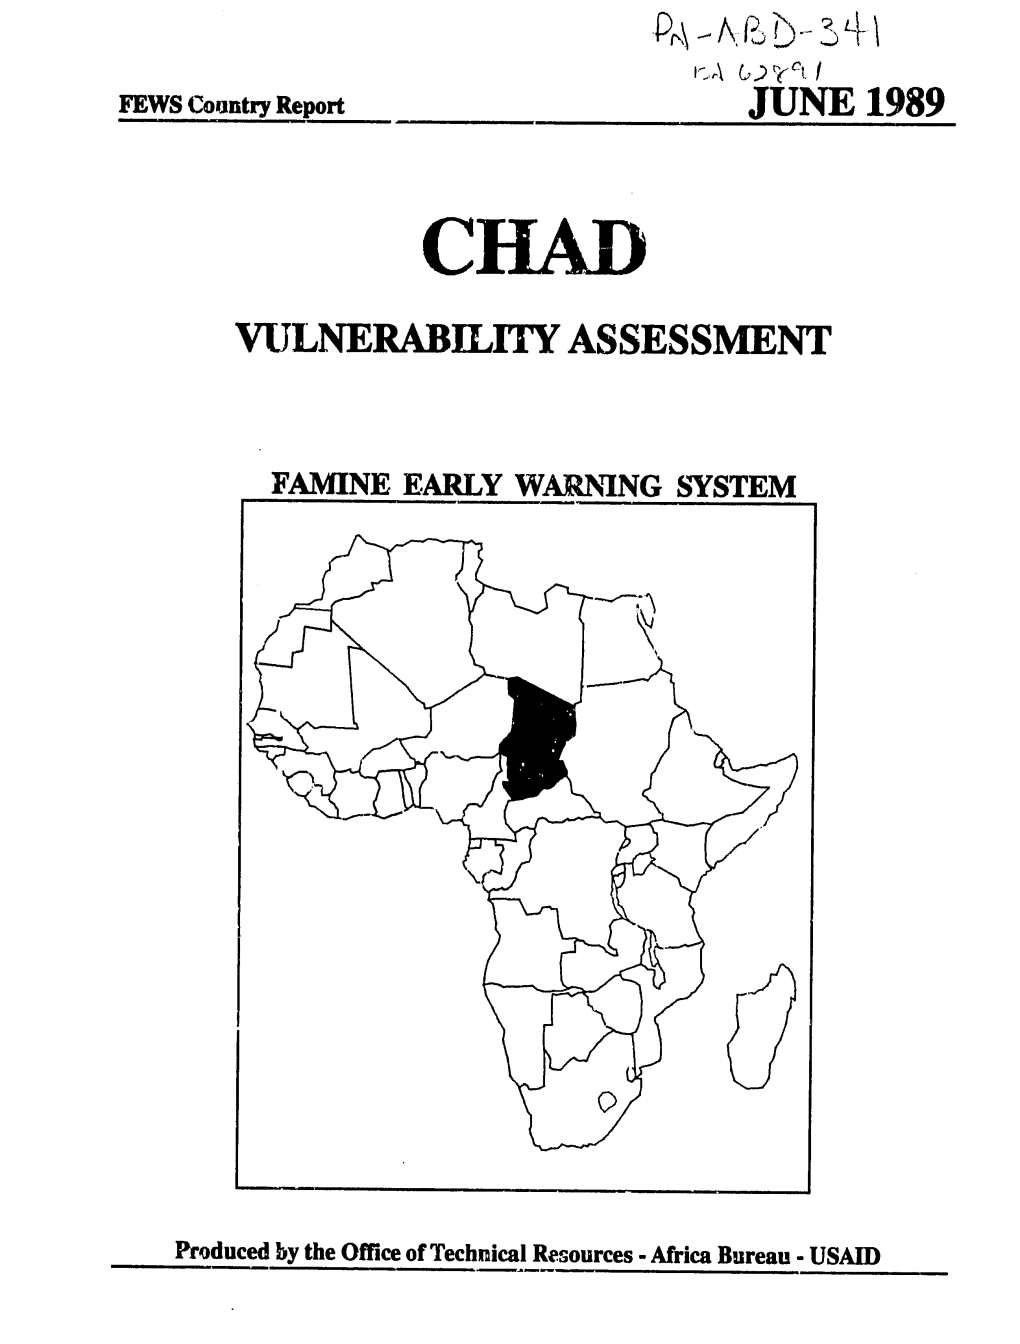 Chad Vulnerability Assessment